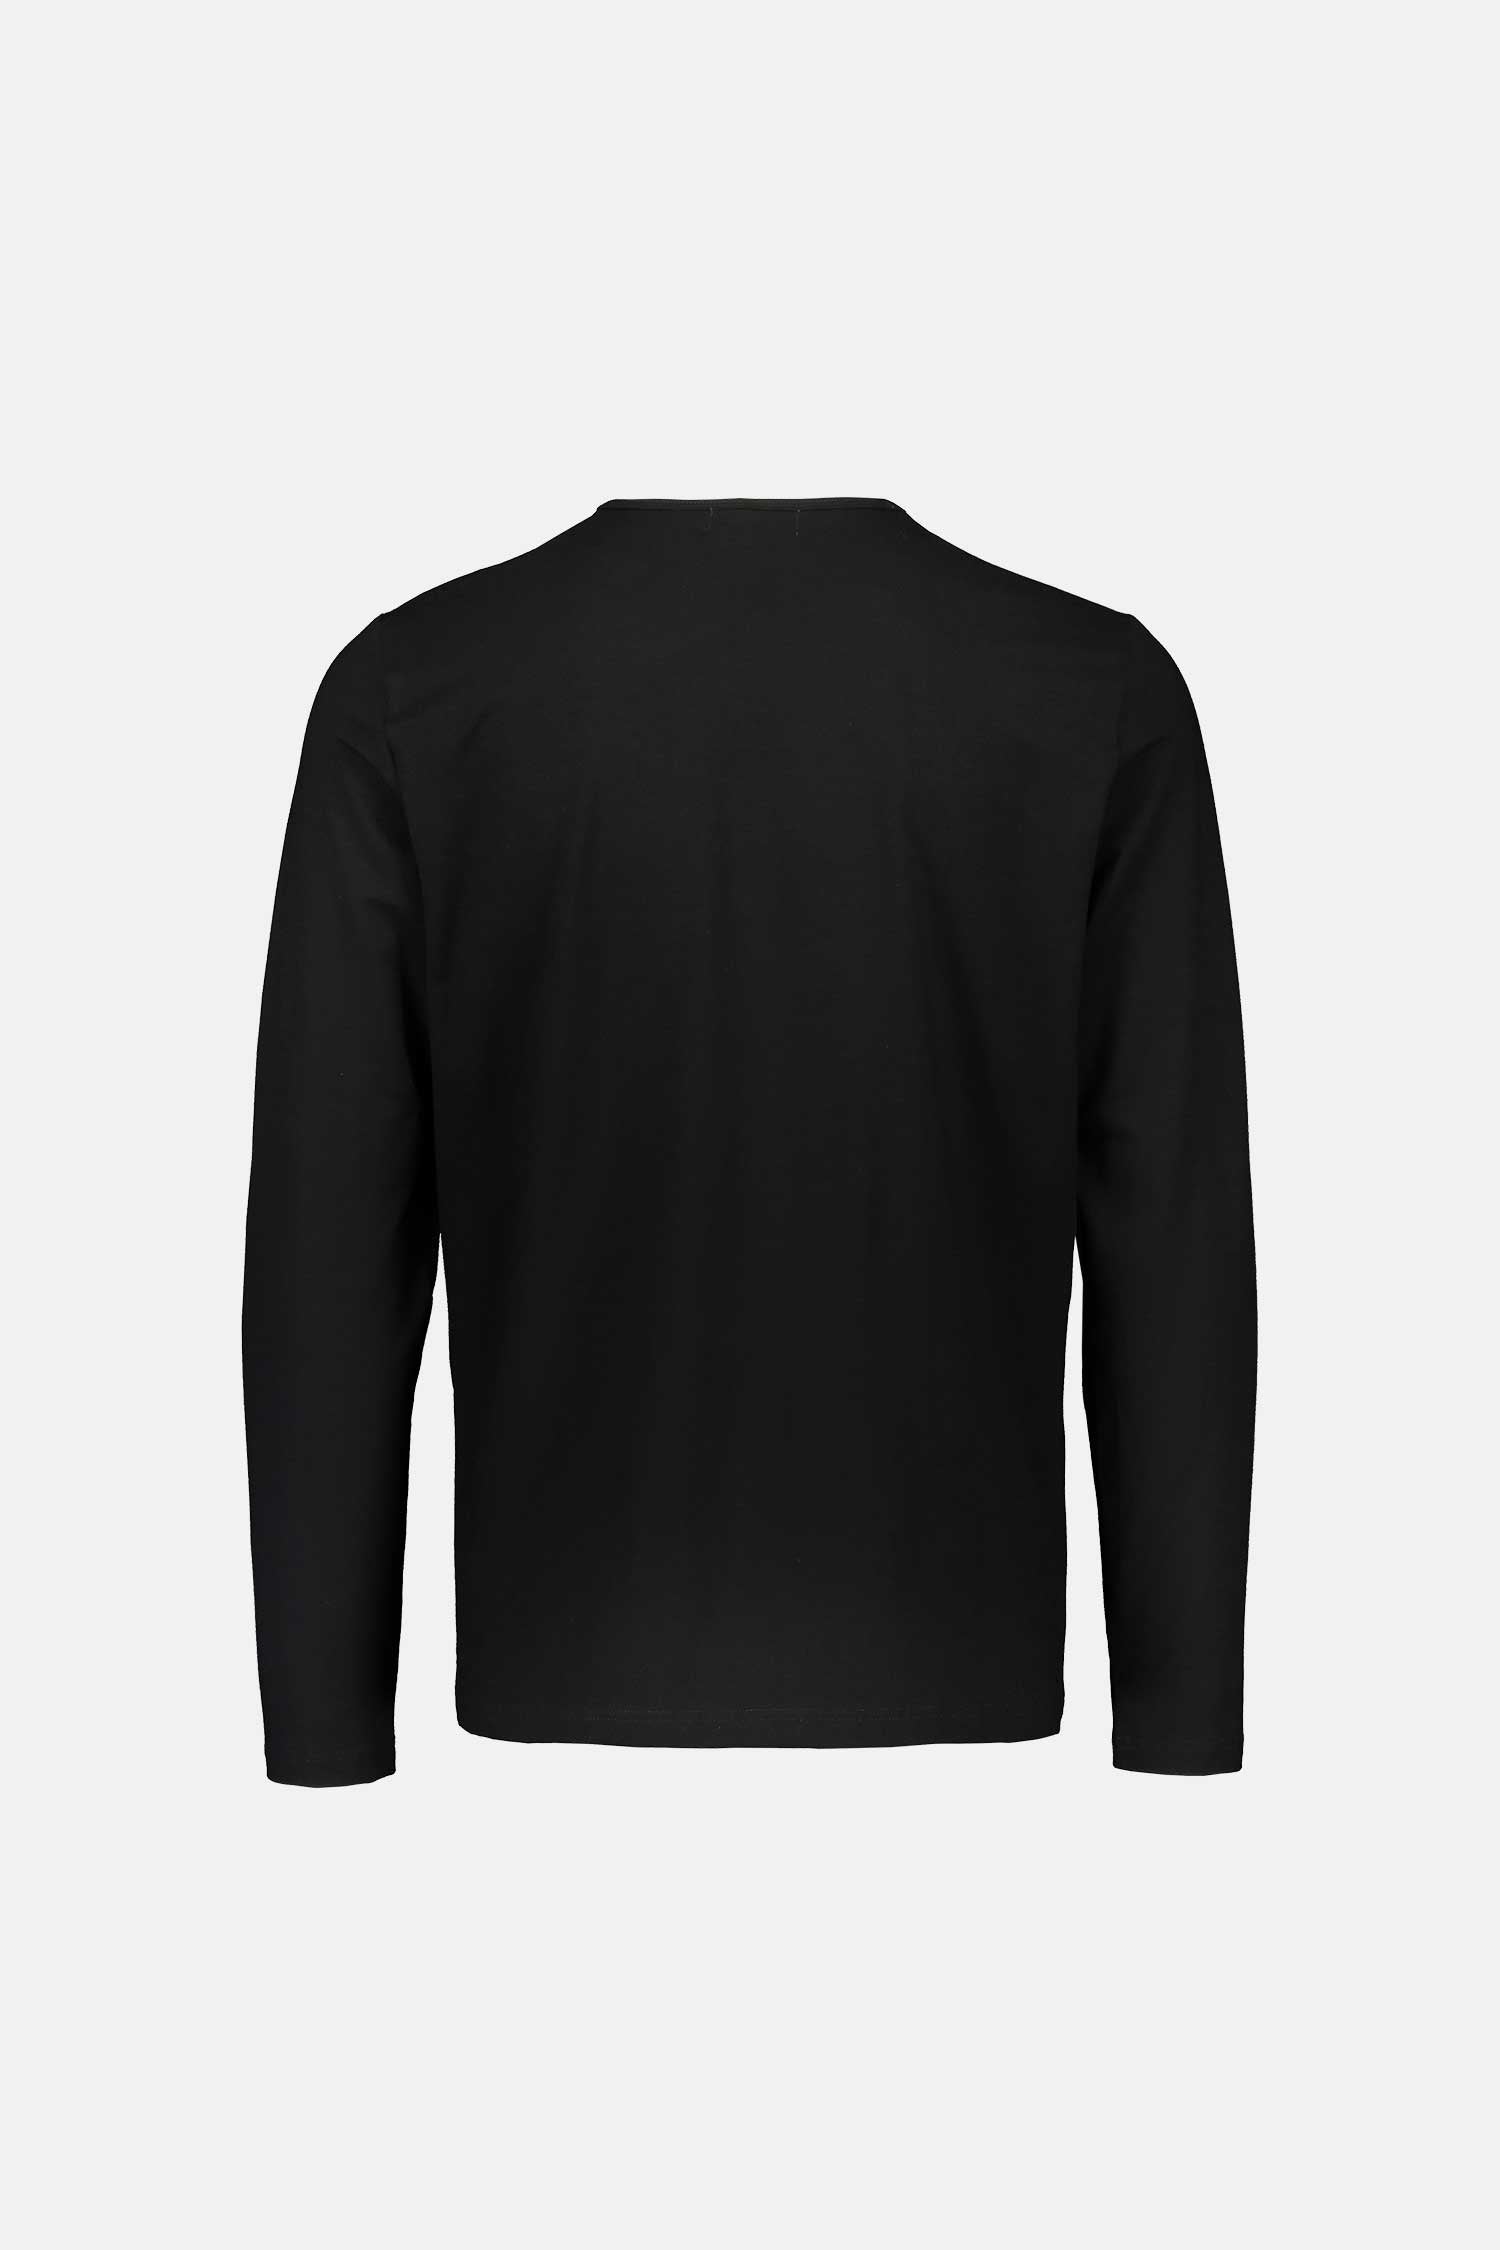 Frenn Isko sustainable premium quality Oeko-Tex certified extra soft bamboo viscose long sleeve t-shirt black